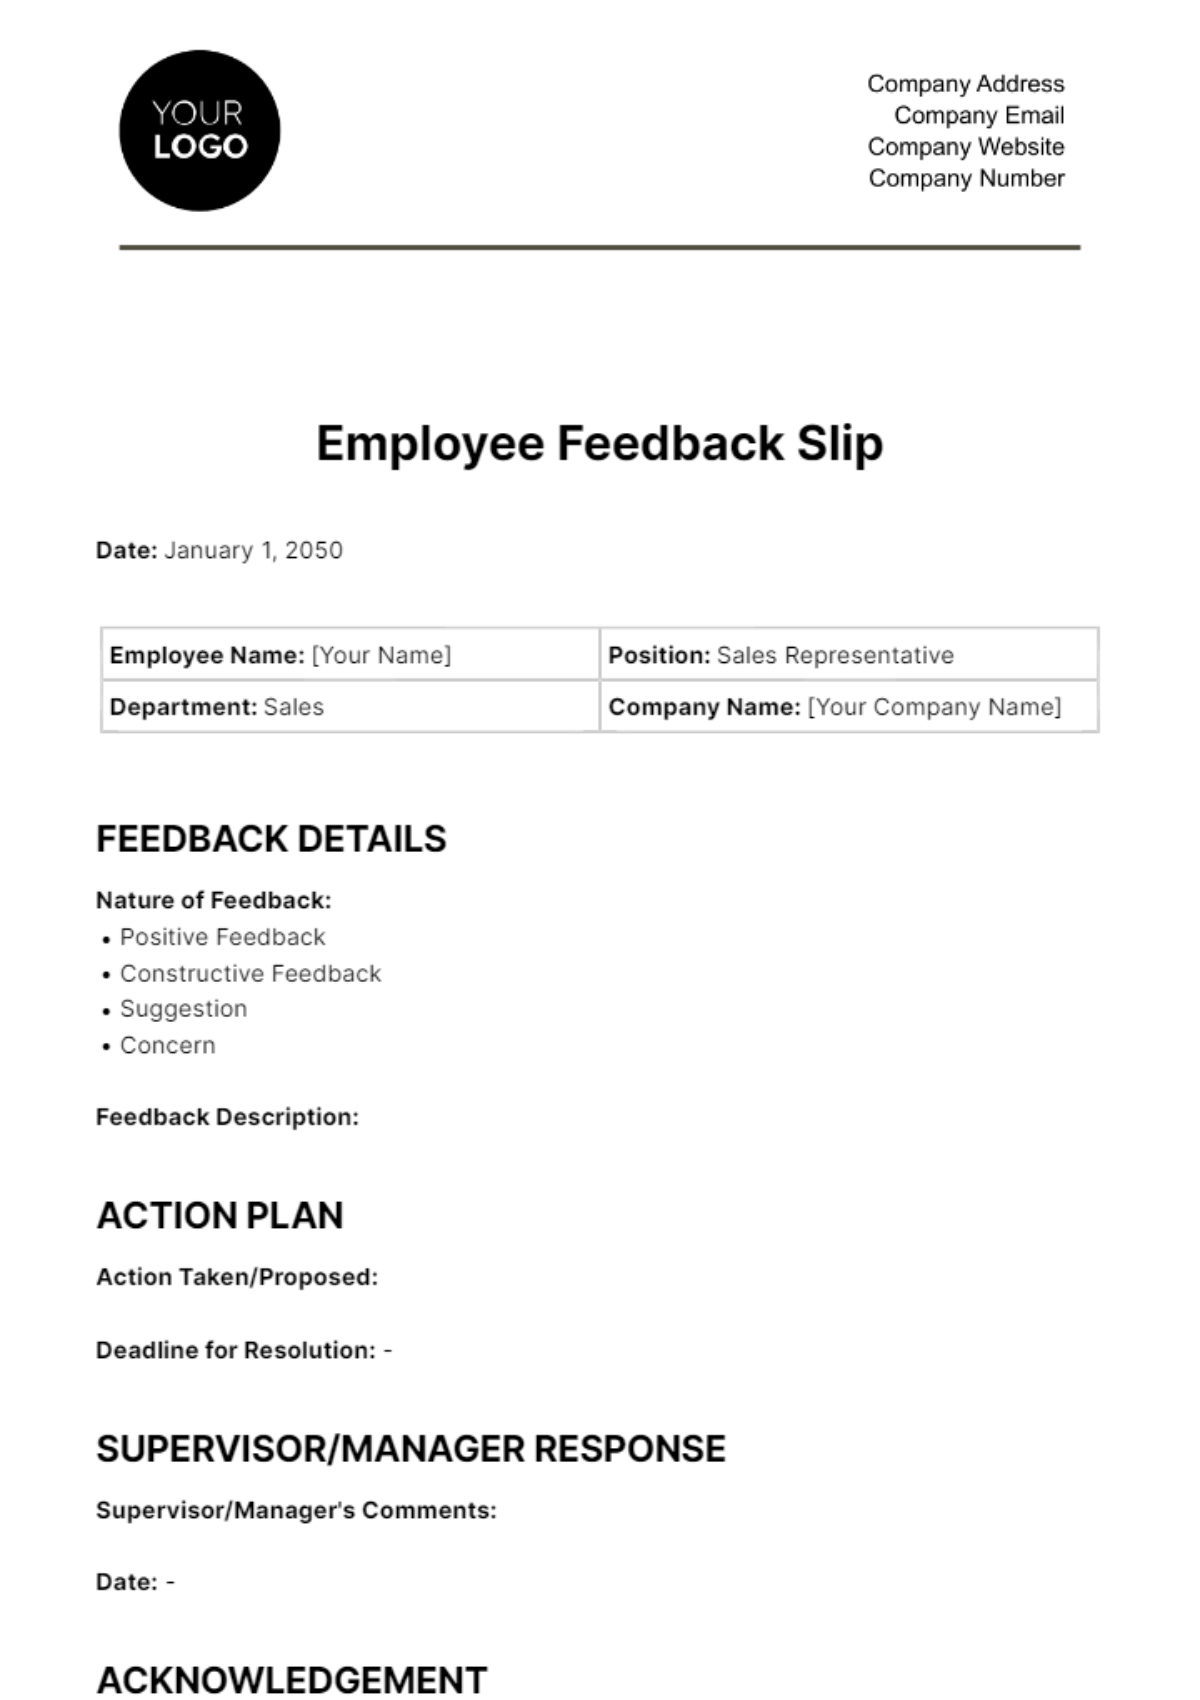 Employee Feedback Slip HR Template